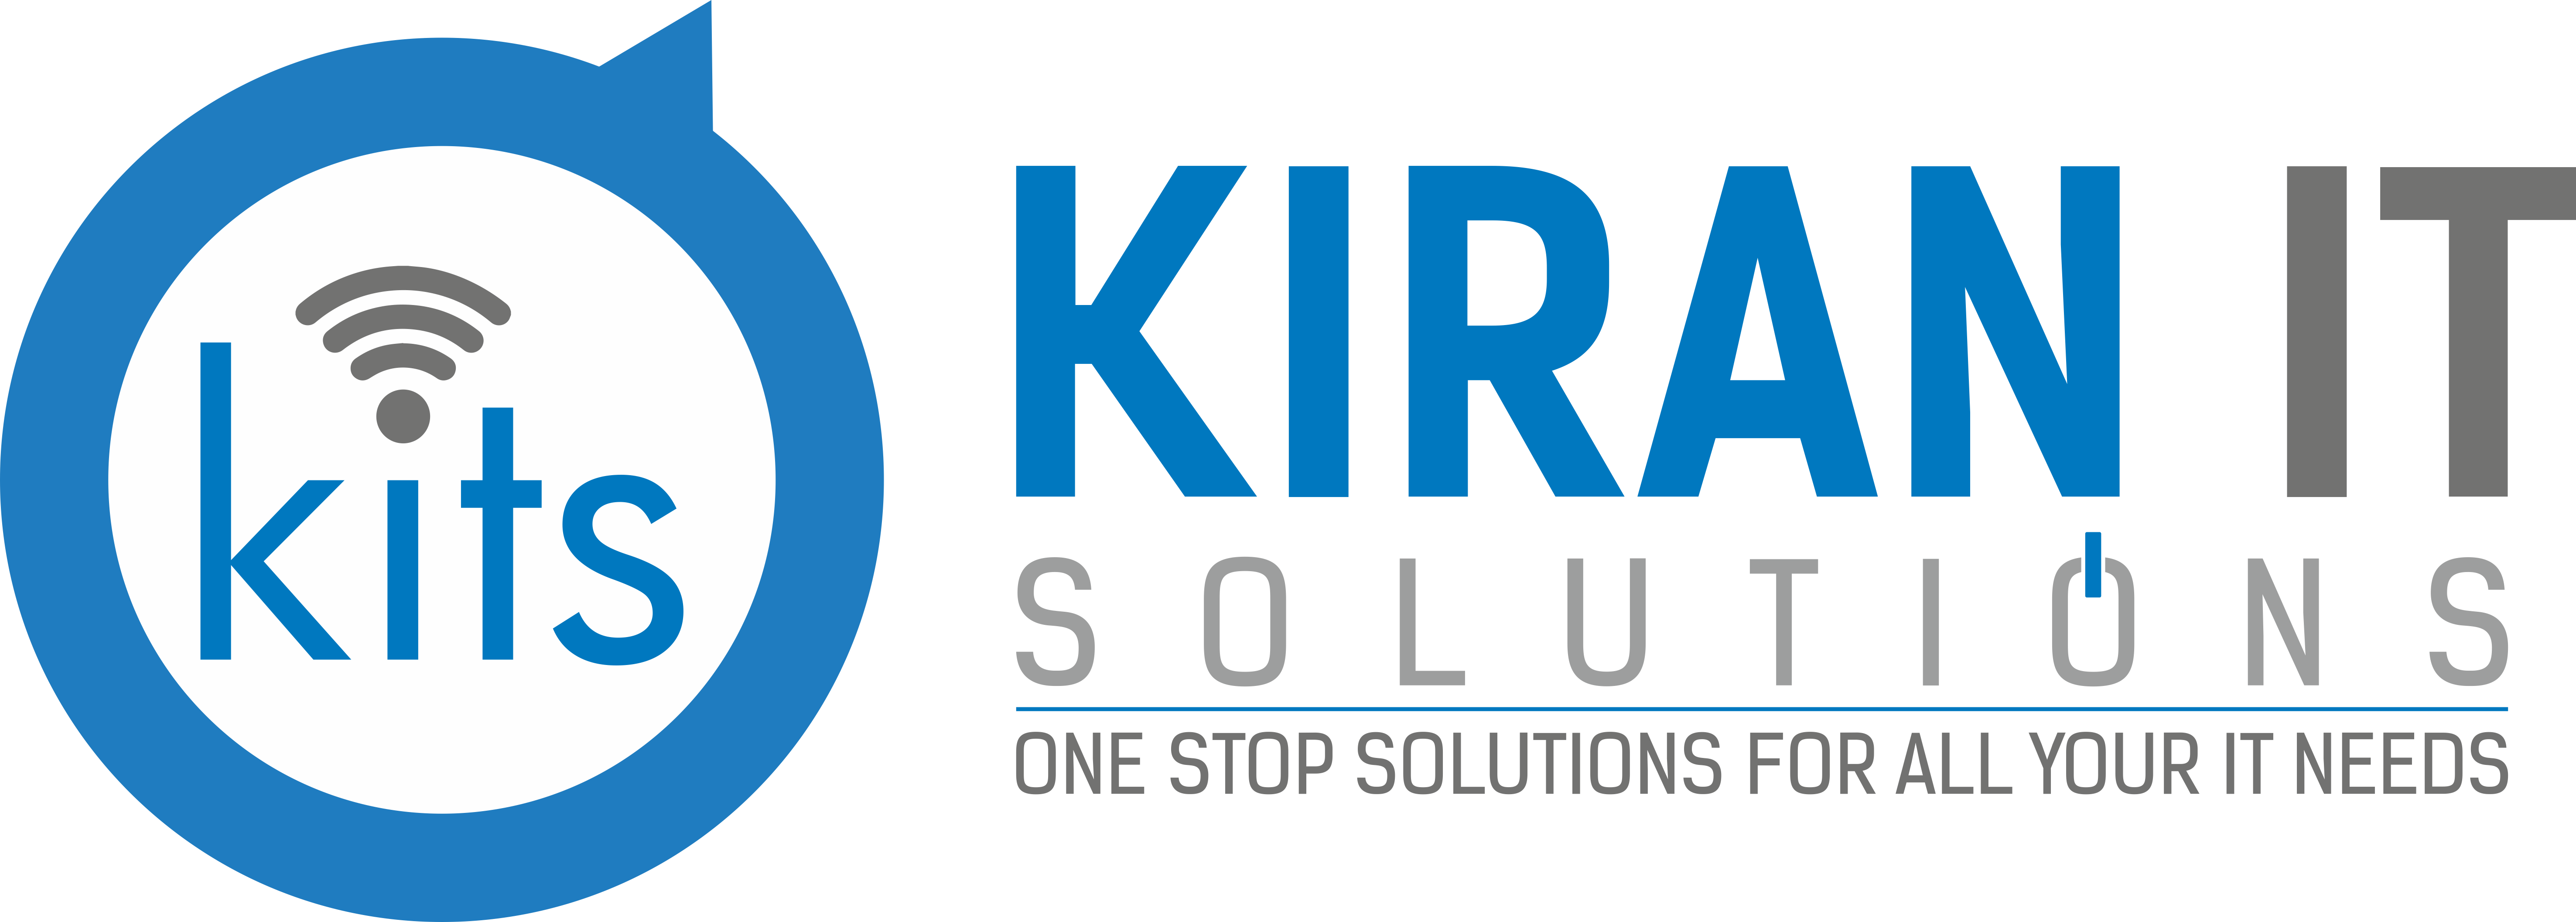 kiran it solutions logo